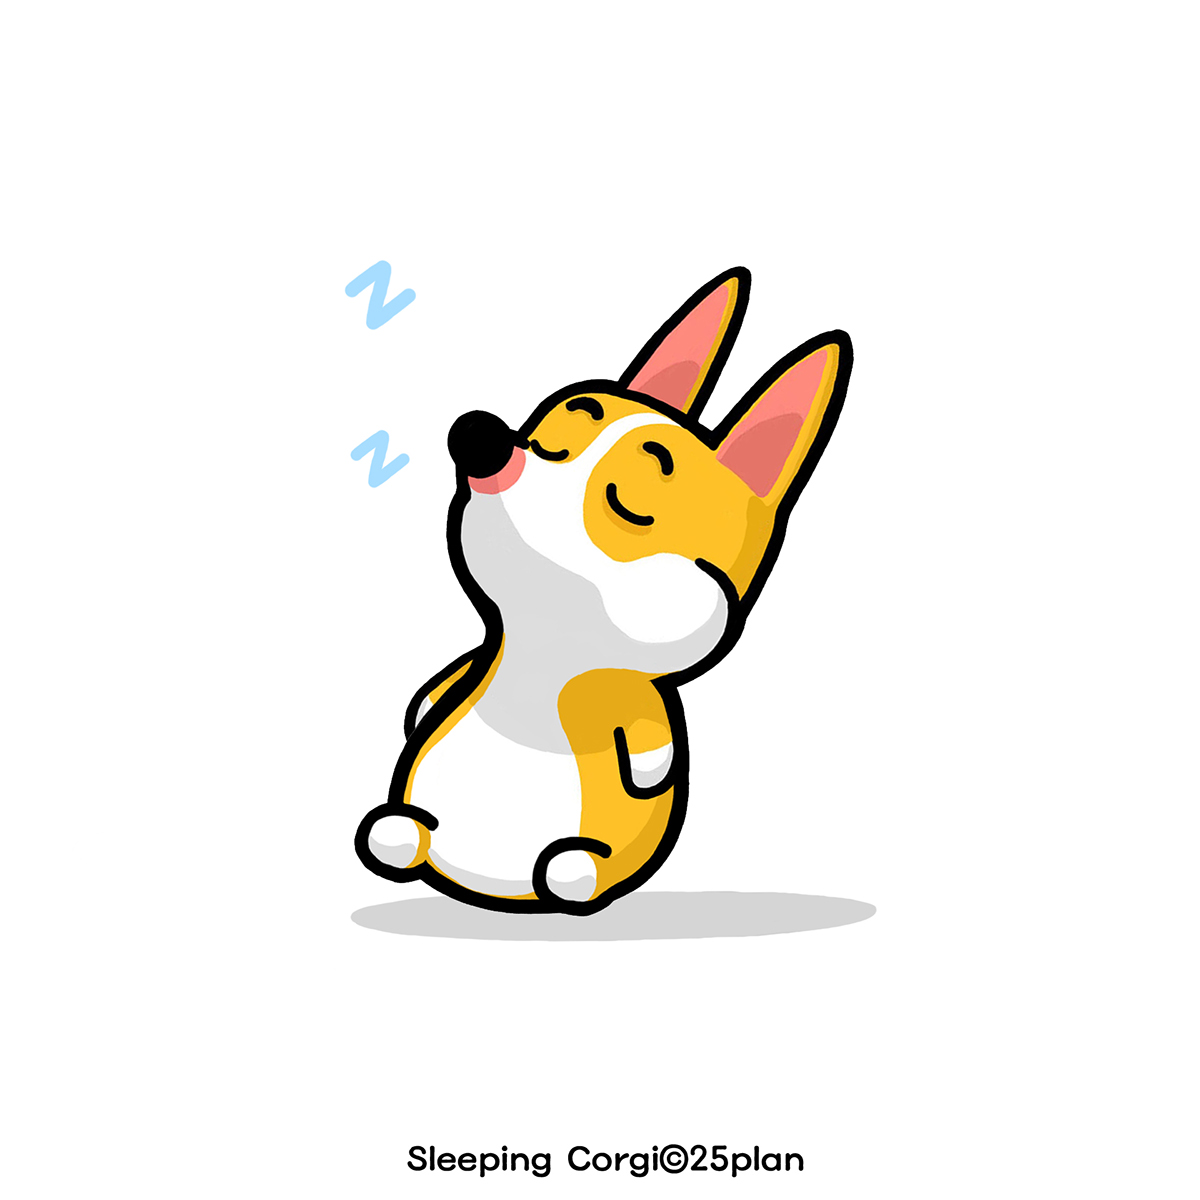 Sleeping Corgi artwork image pattern Welshcorgi dog funny cute